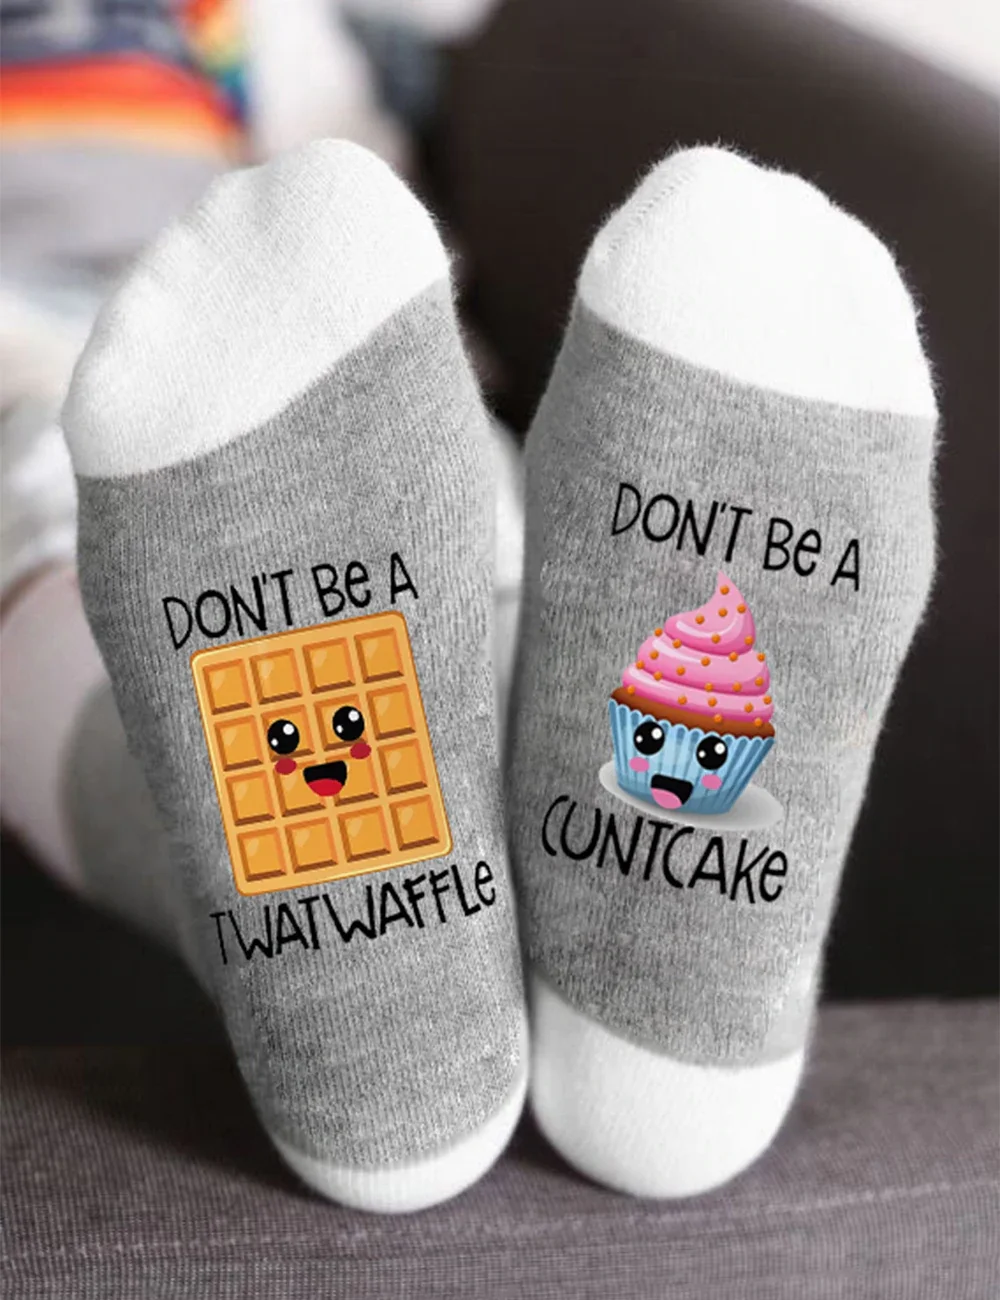 Don't Be A Twatwaffle Cuntcake Socks